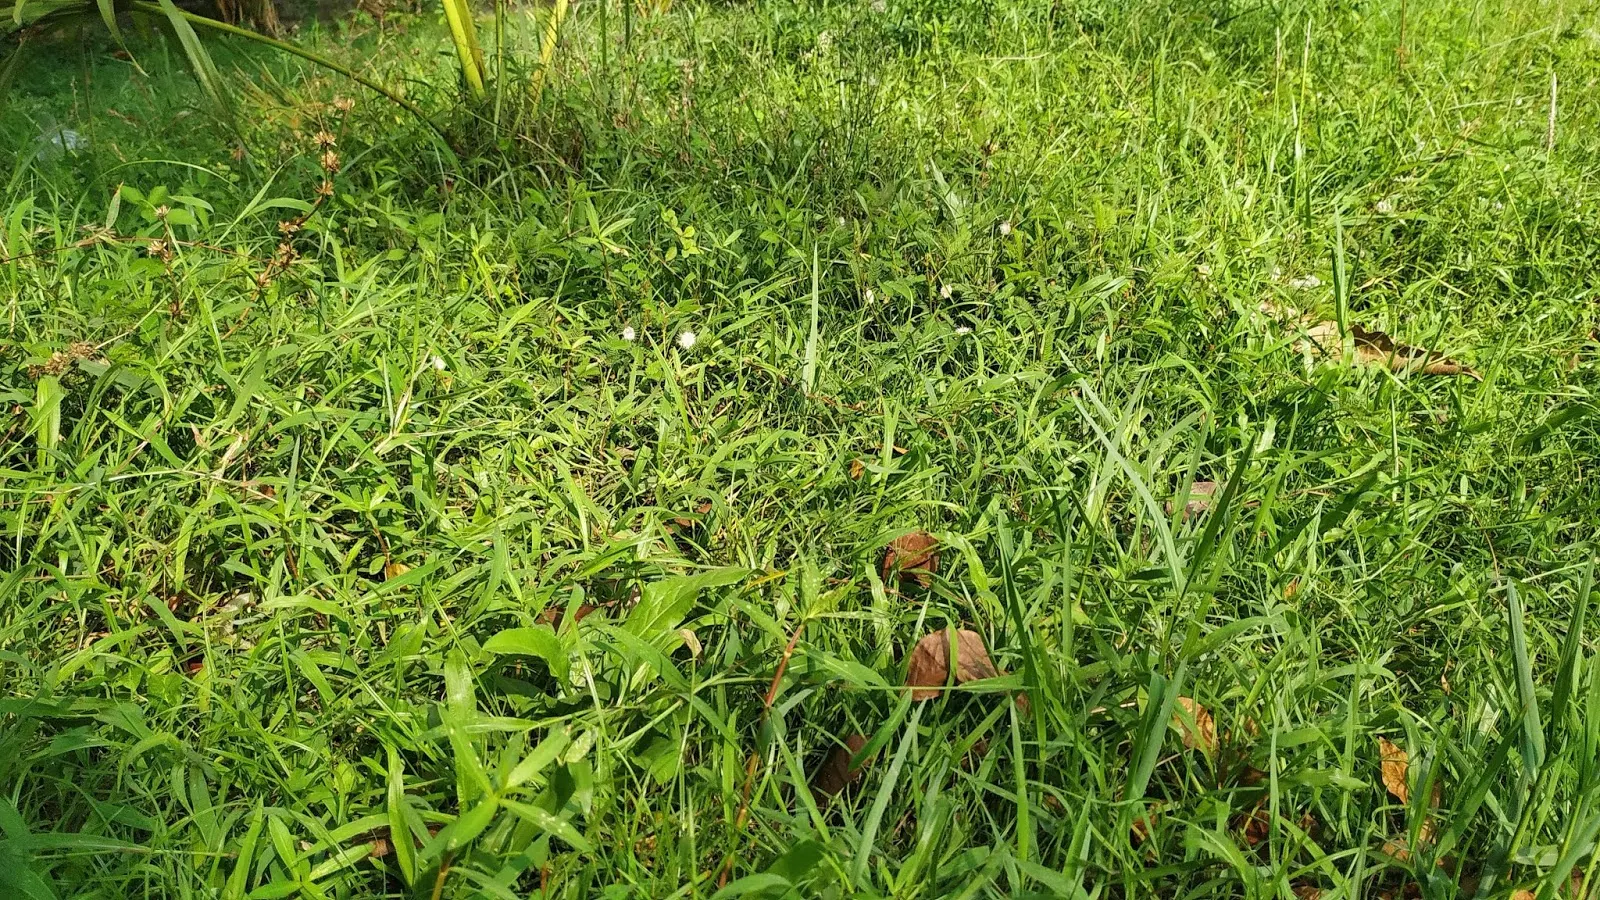 Grass in Green Field